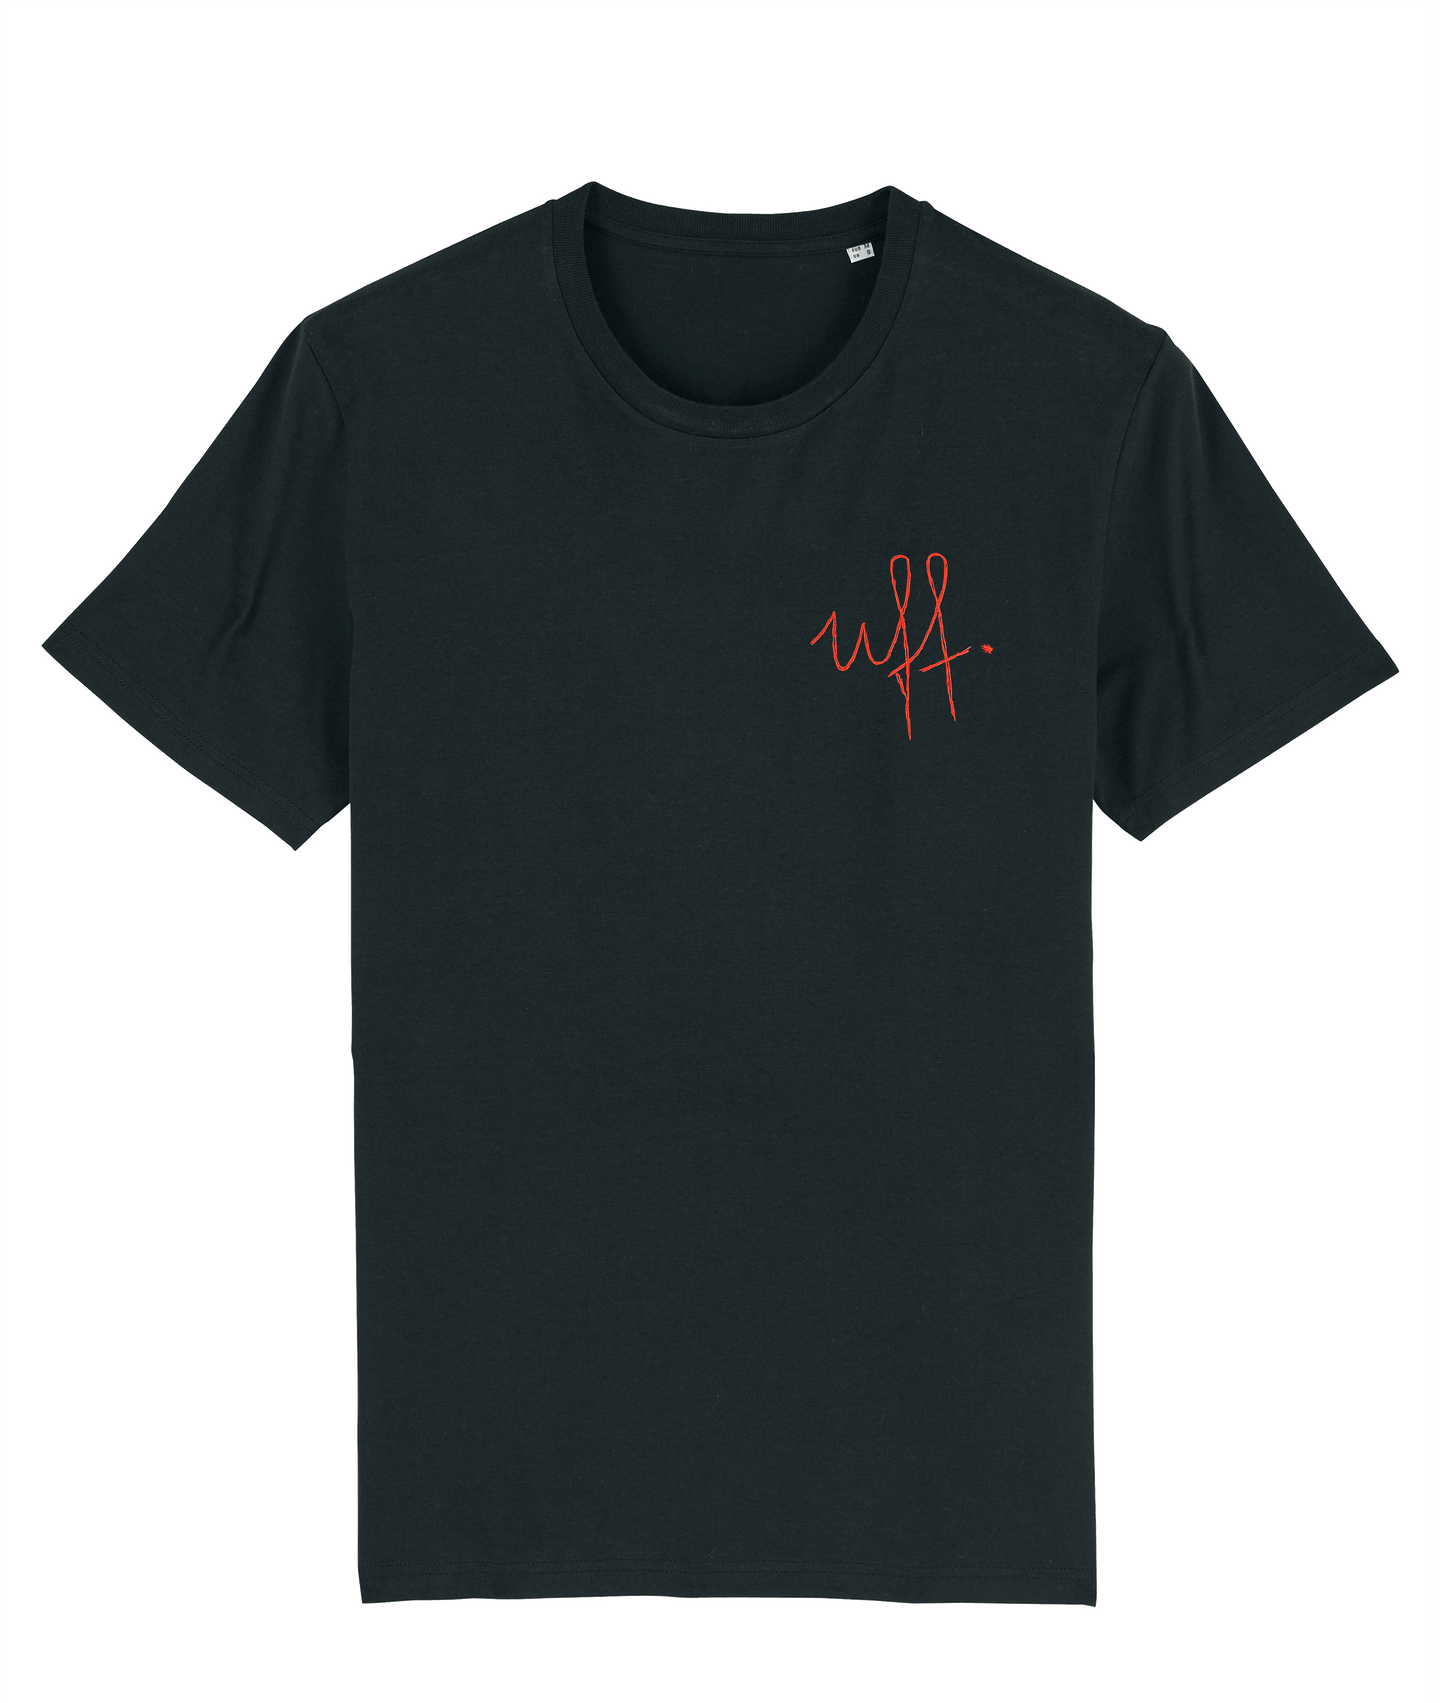 Organic Shirt - The Uff Black